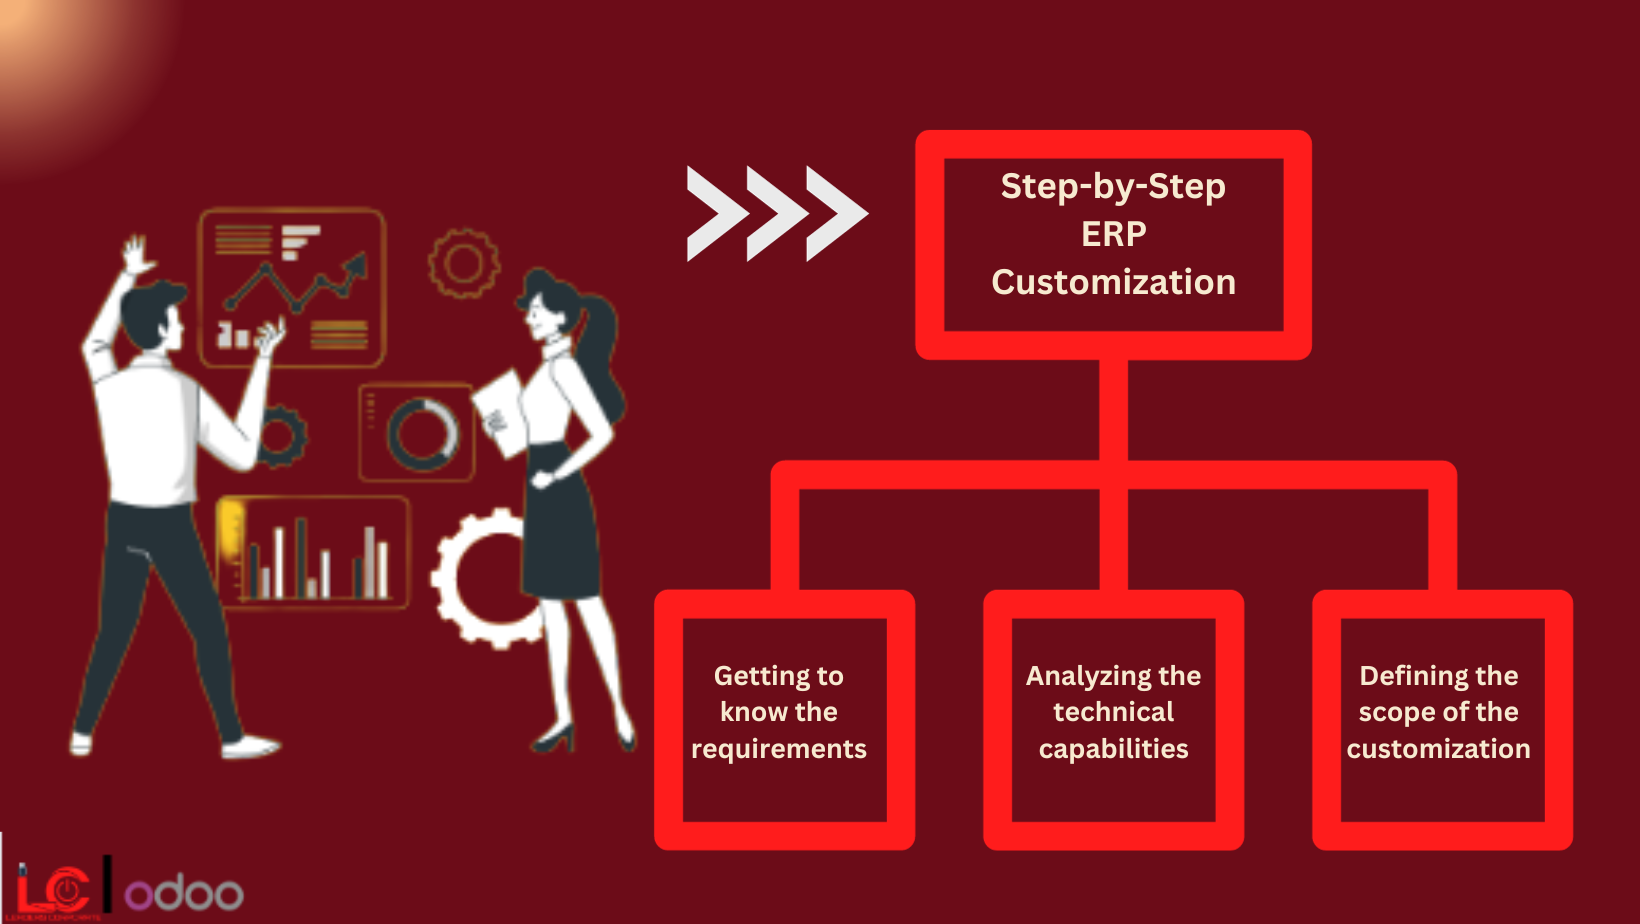 Step-by-Step ERP Customization